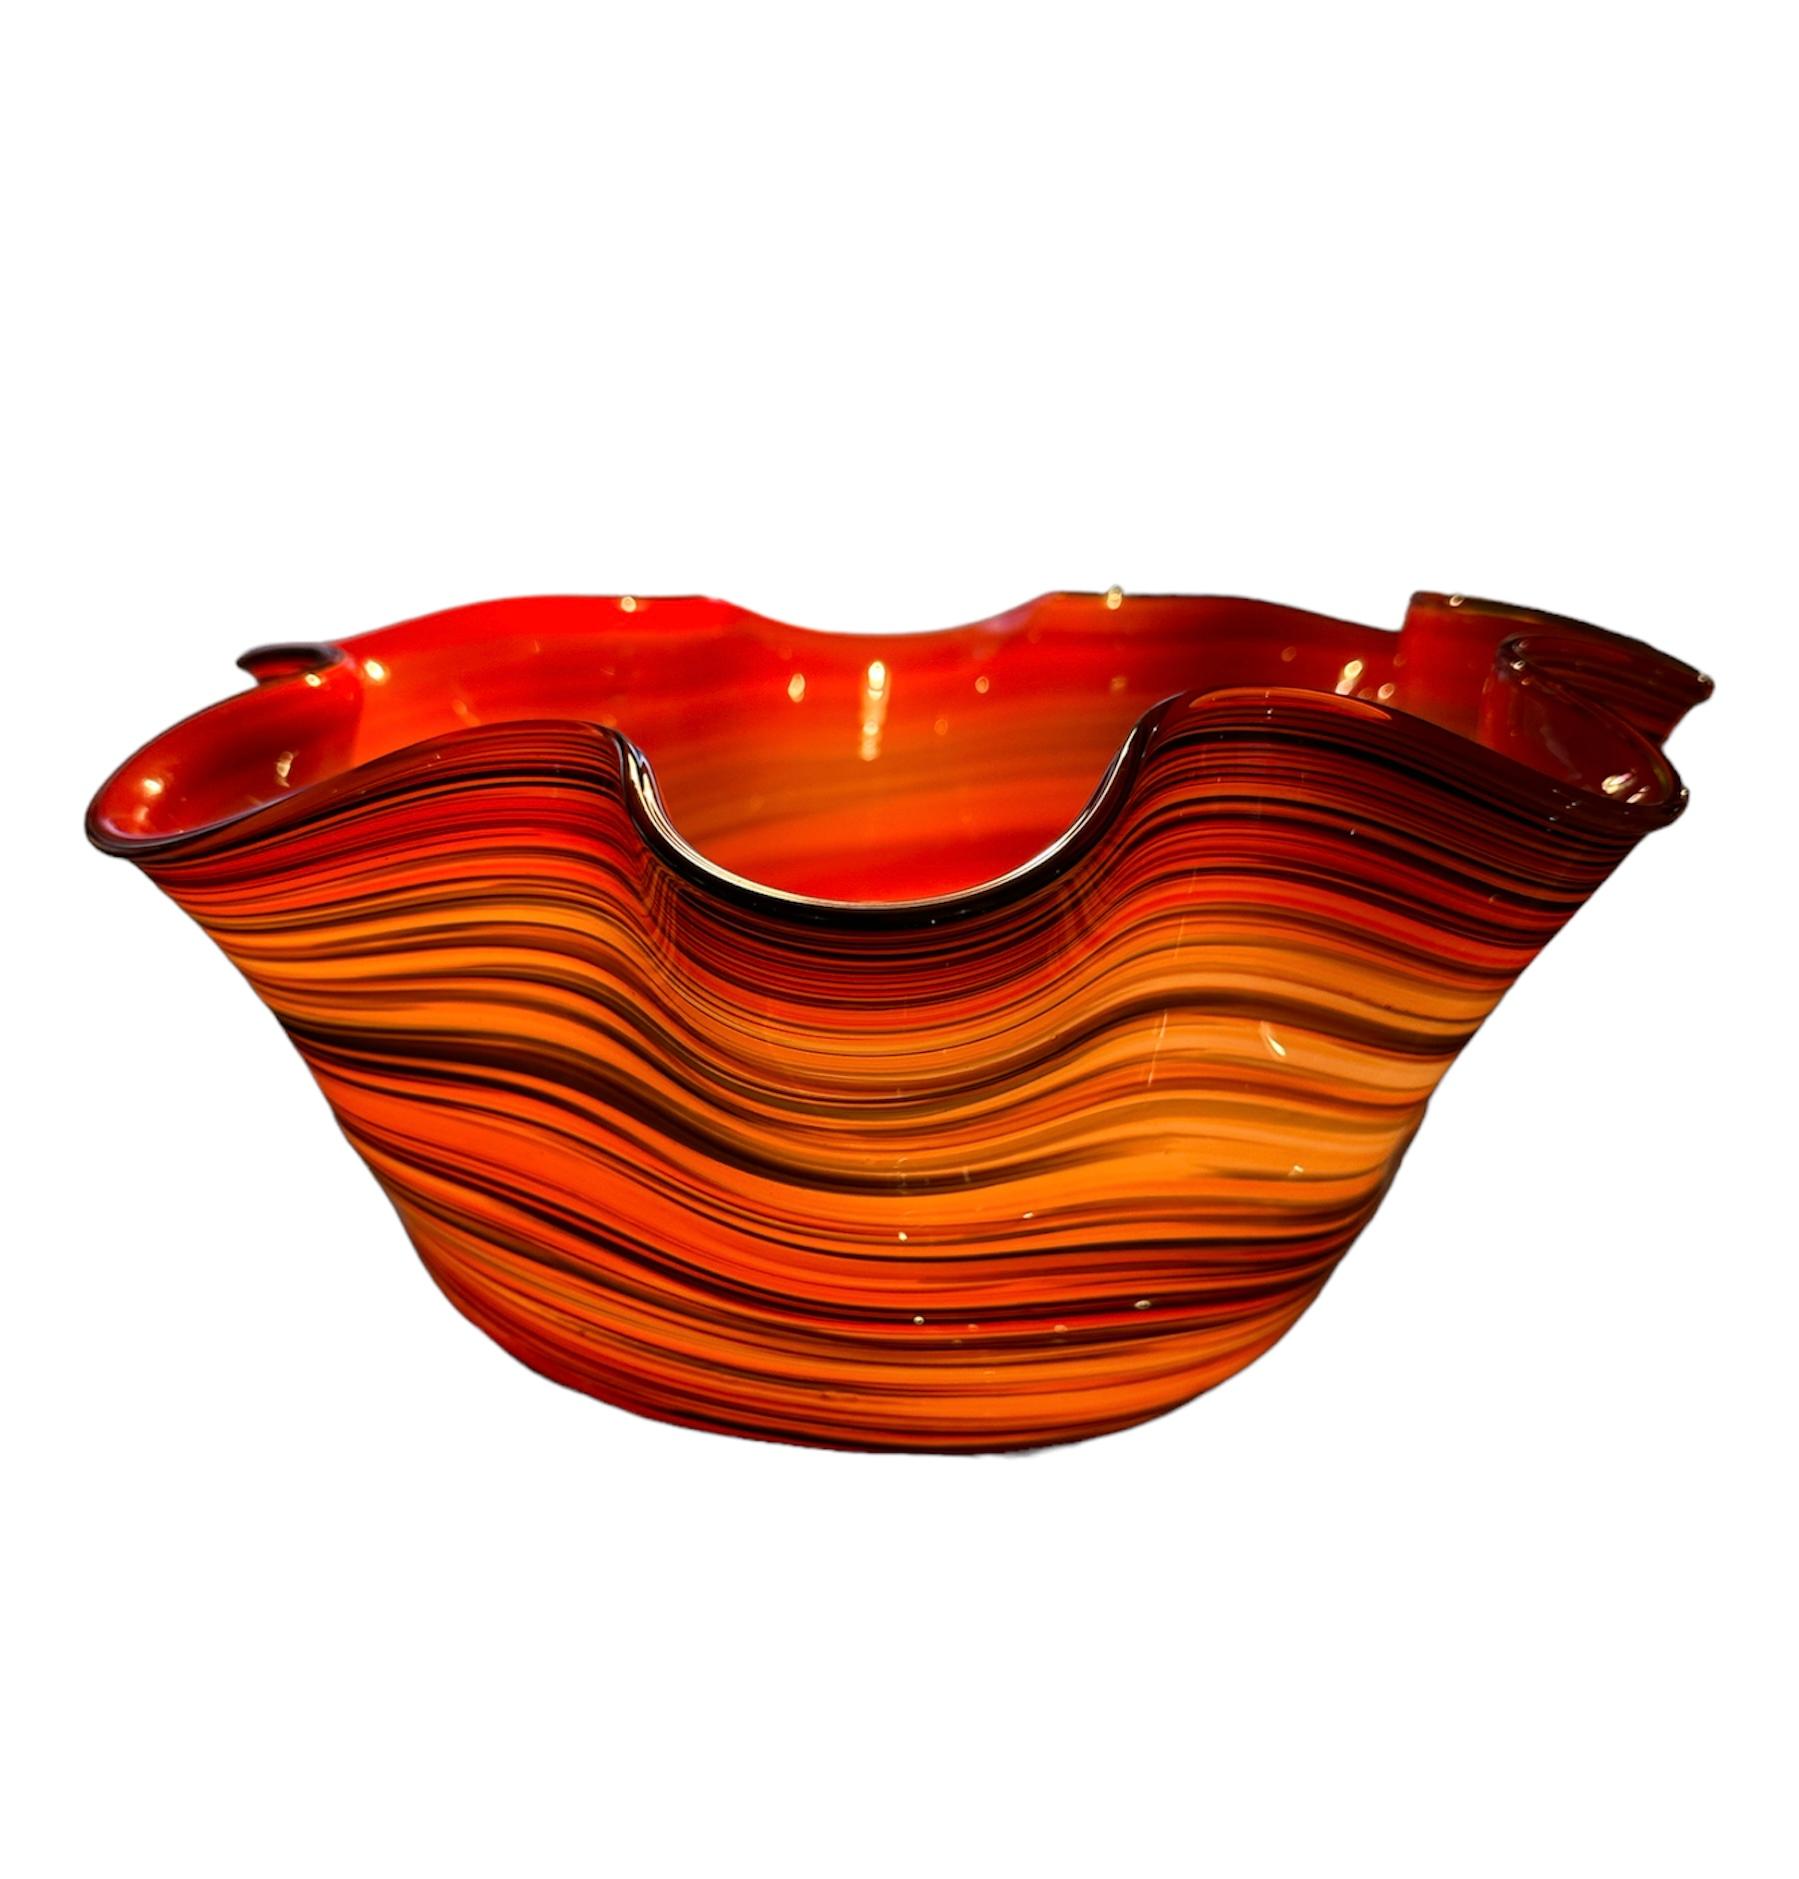 20th Century Vibrant  Blown Glass Handkerchief Bowl, Attributed to Murano